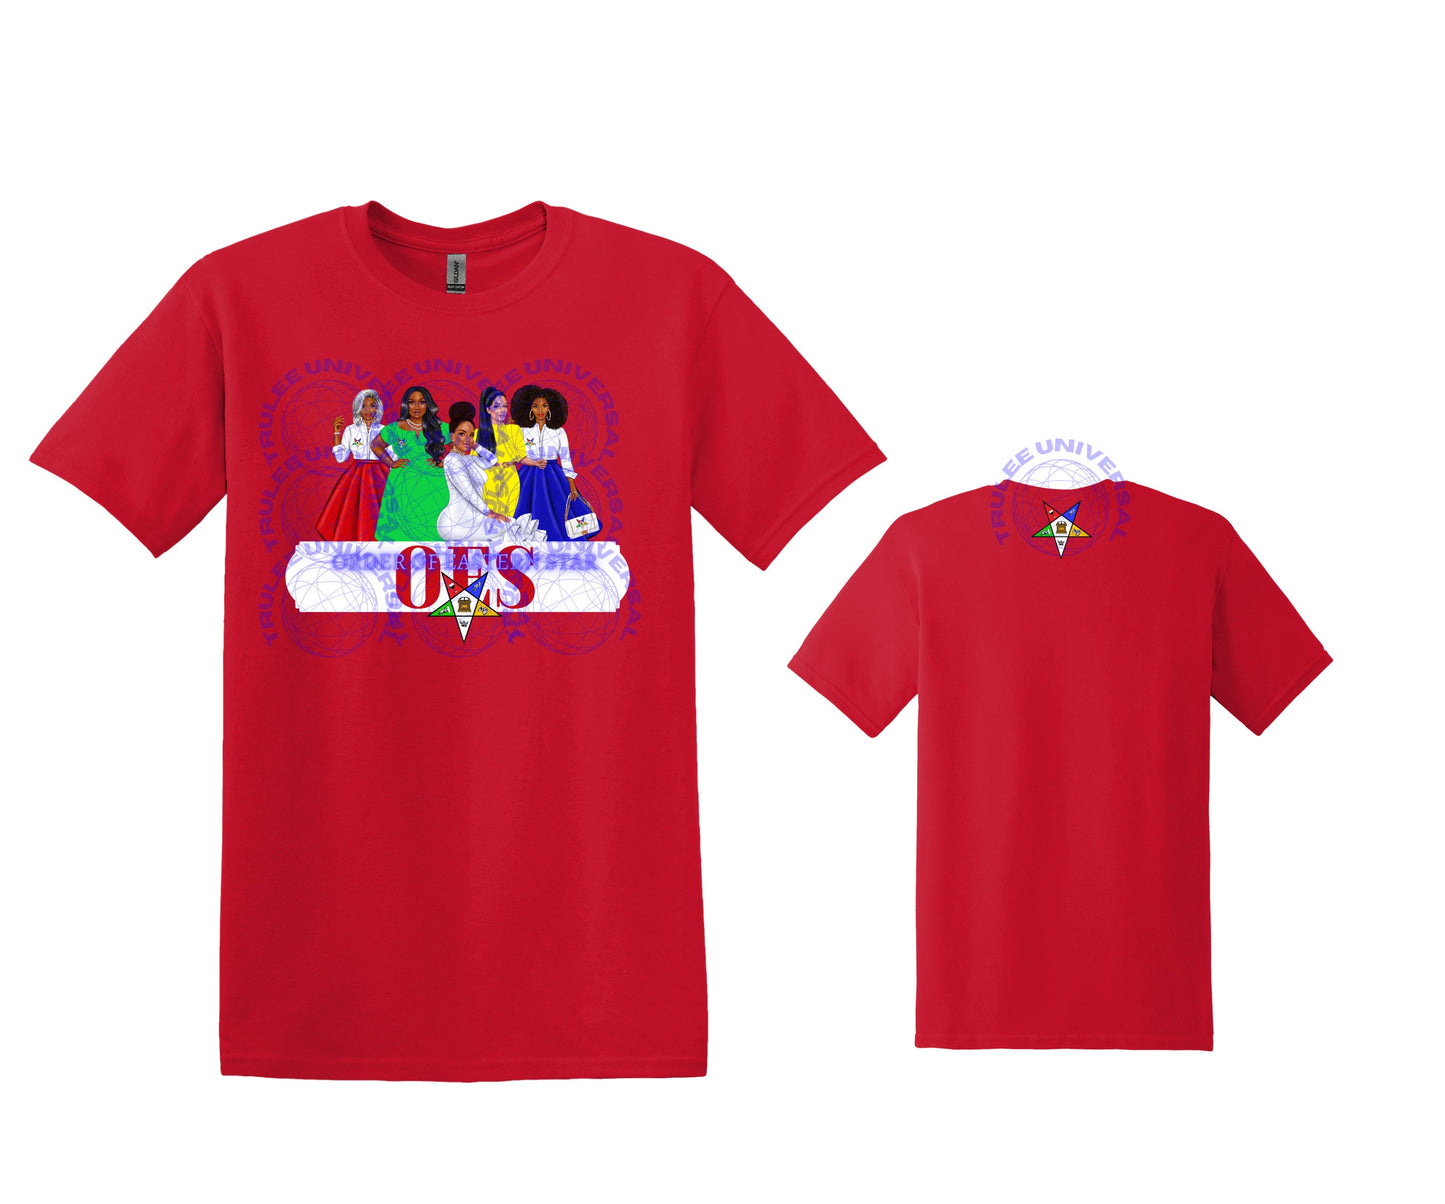 OES Sisters Order of Eastern Star OES Sorority T-shirt teeshirt tee-shirt Sisterhood Freemasonic both star designs